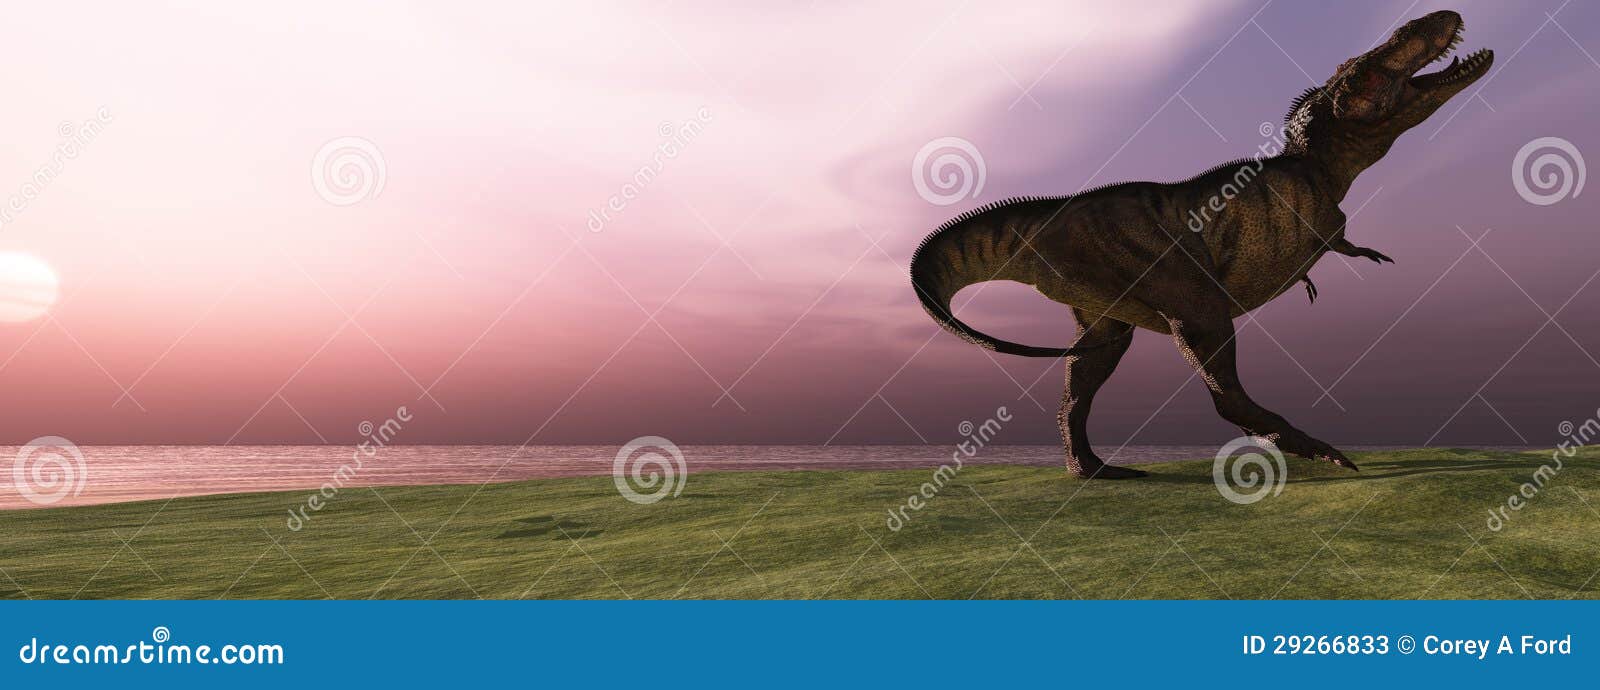 t-rex at sunrise